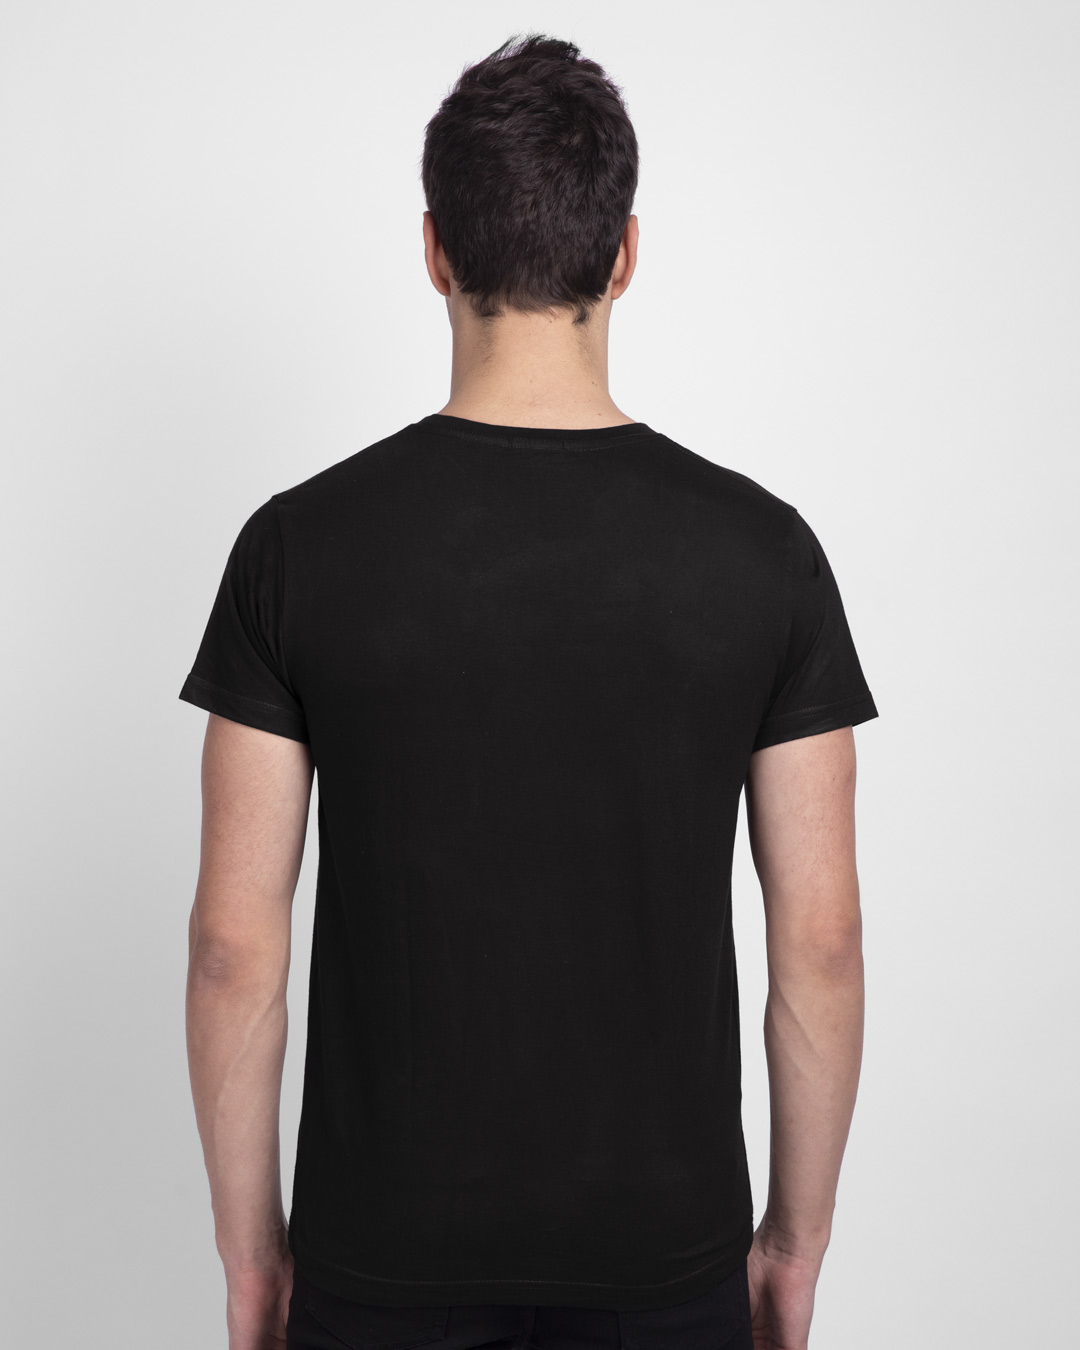 Shop Bugs thinking Half Sleeve T-Shirt (LTL)-Back